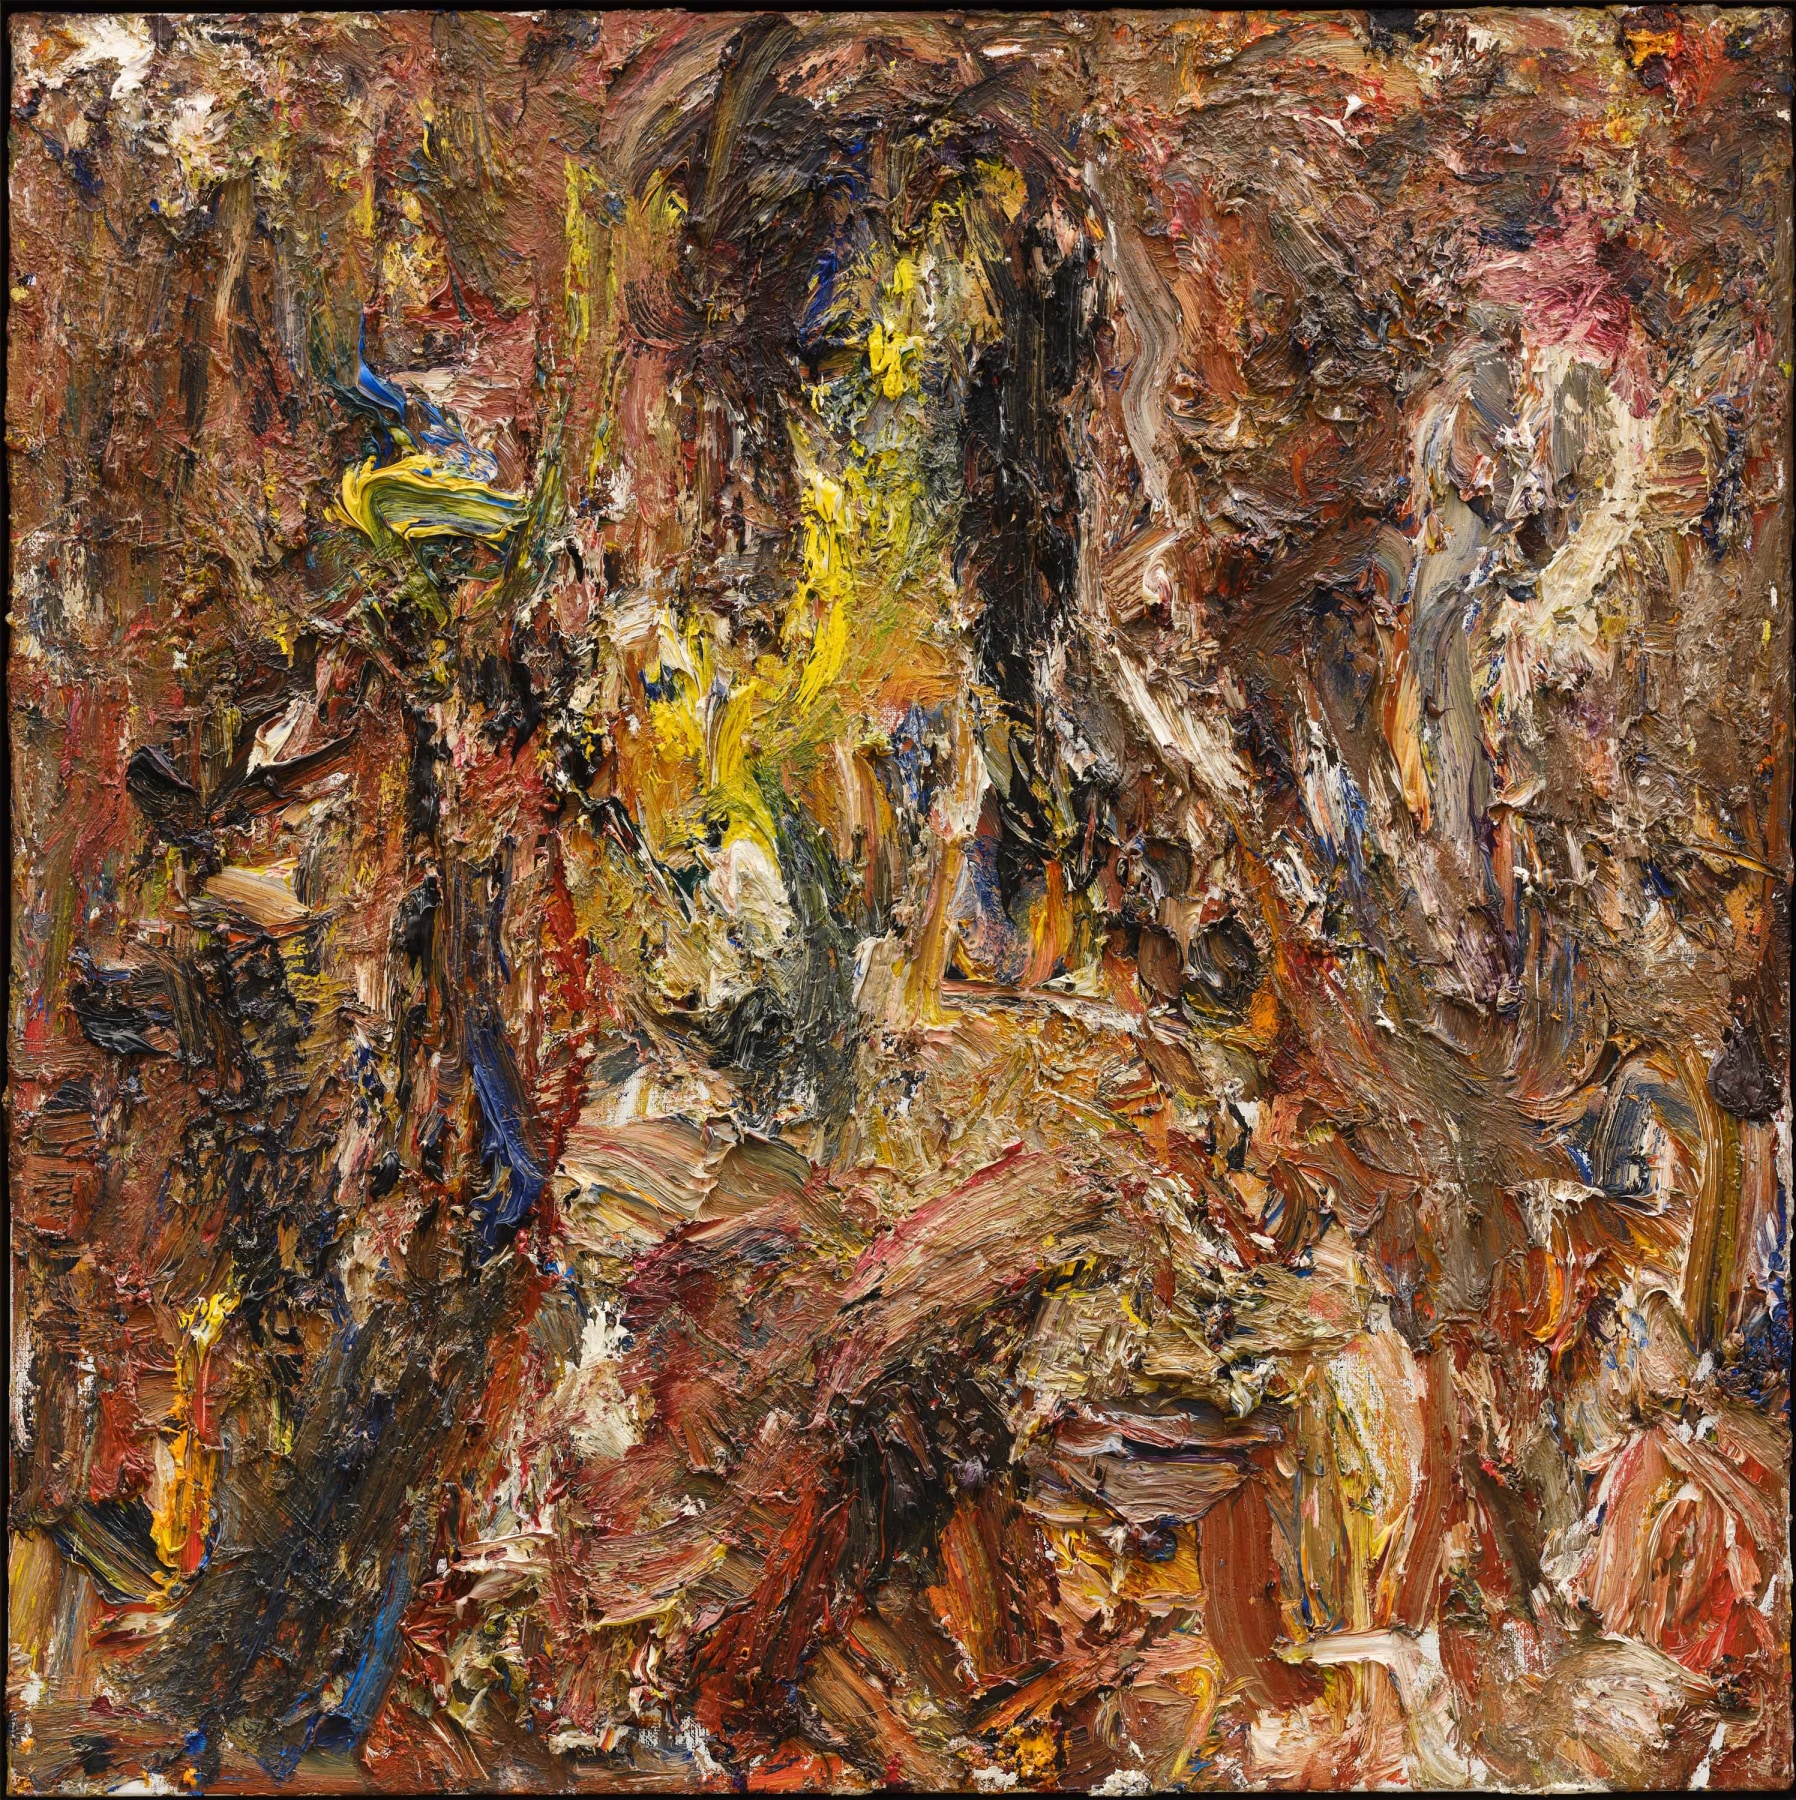 Eug&amp;egrave;ne Leroy

&amp;ldquo;Elle avec M.&amp;rdquo;, 1997

Oil on canvas

39 1/4 x 39 1/4 inches

100 x 100 cm

LER 413

$175,000